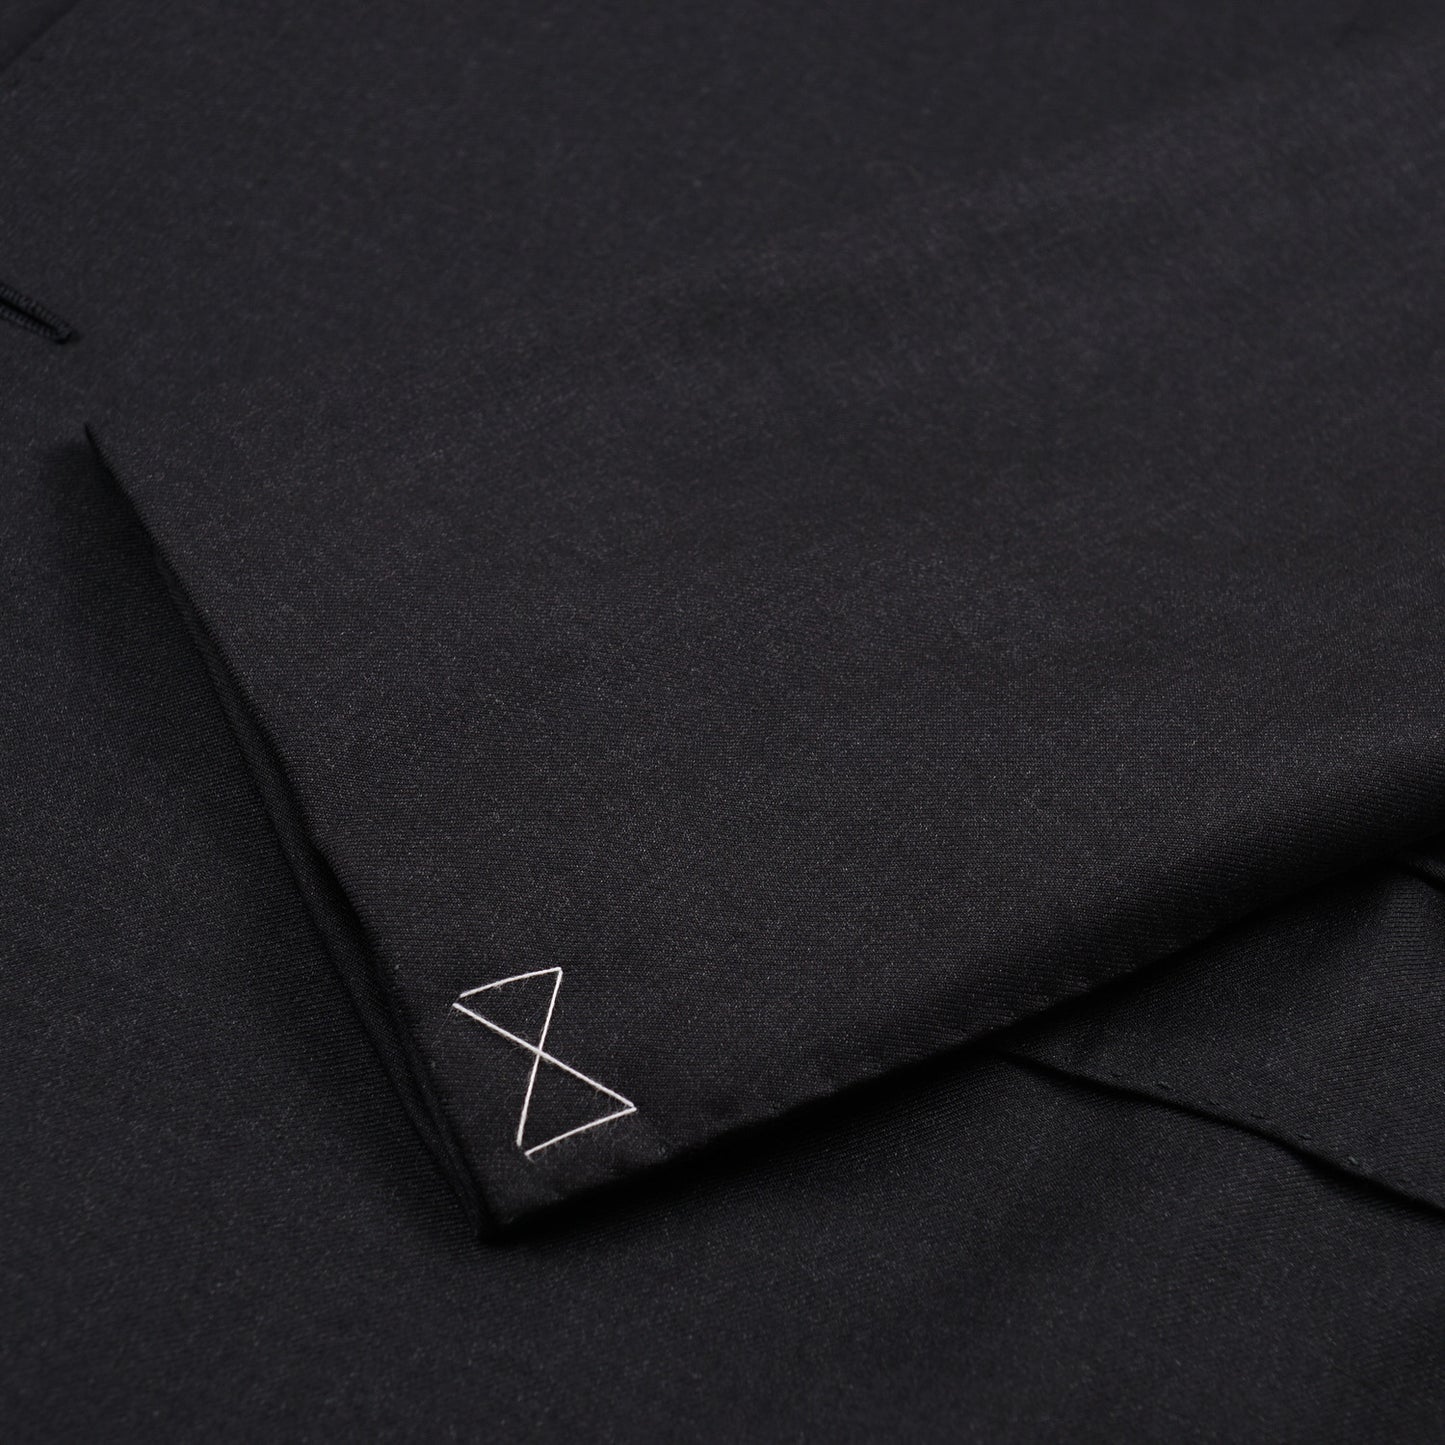 Cesare Attolini Slim-Fit Solid Charcoal Wool Suit - Top Shelf Apparel